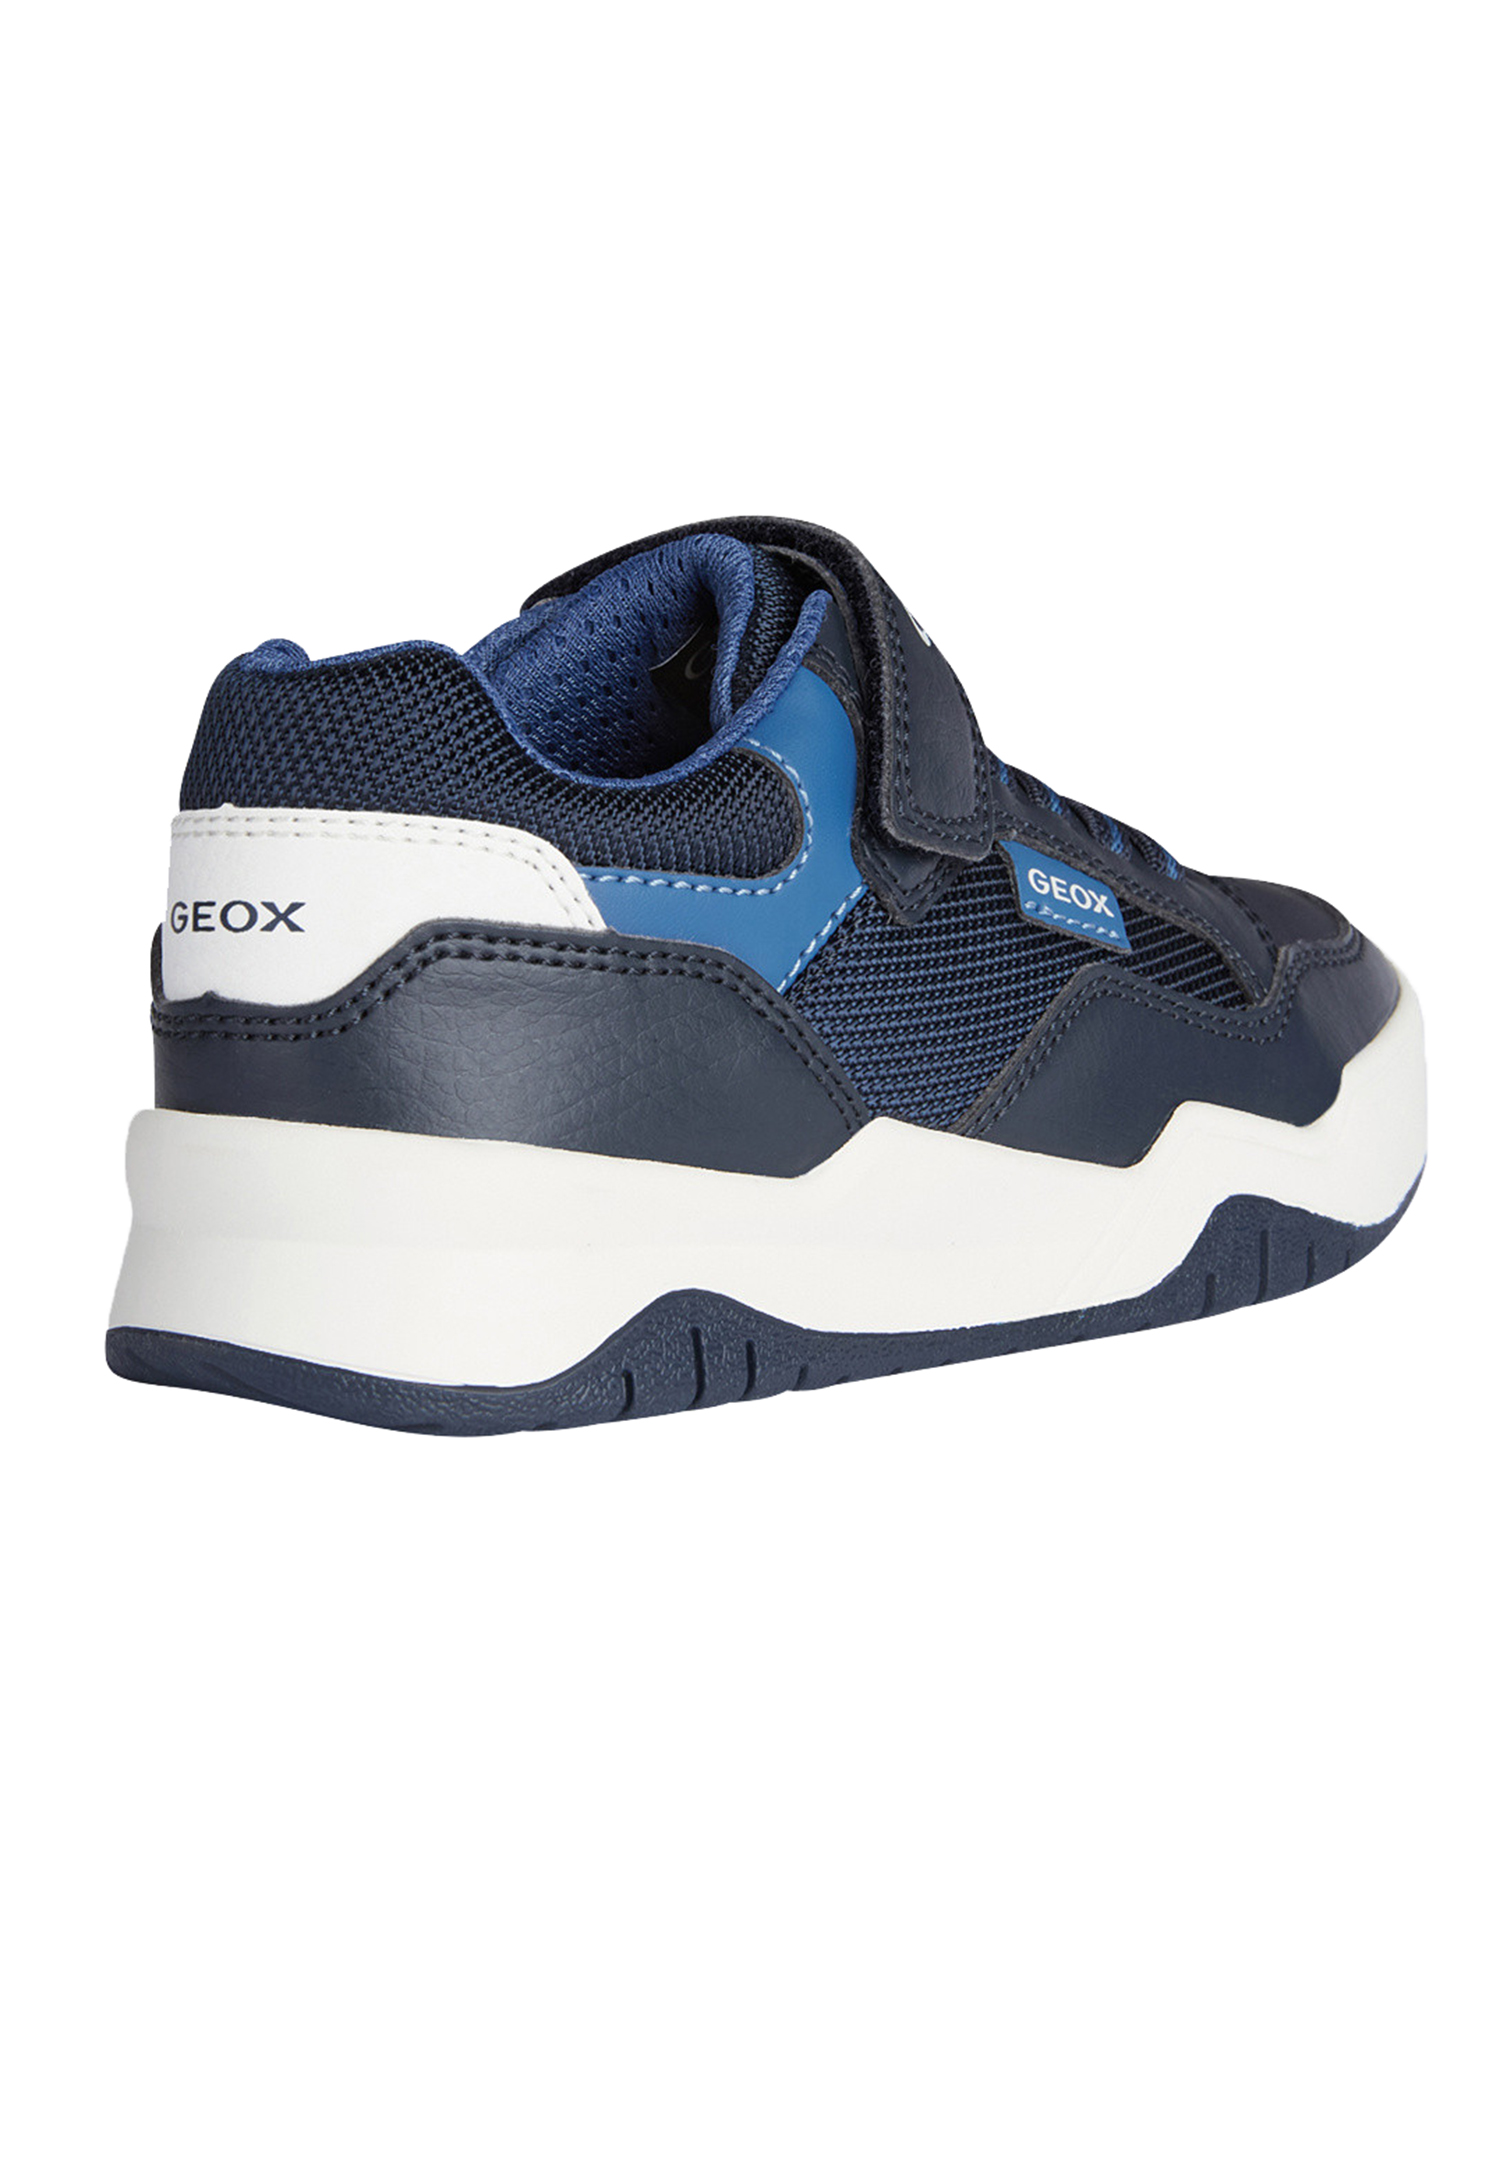 Geox J Pereth Jungen Sneaker J167RB blau 